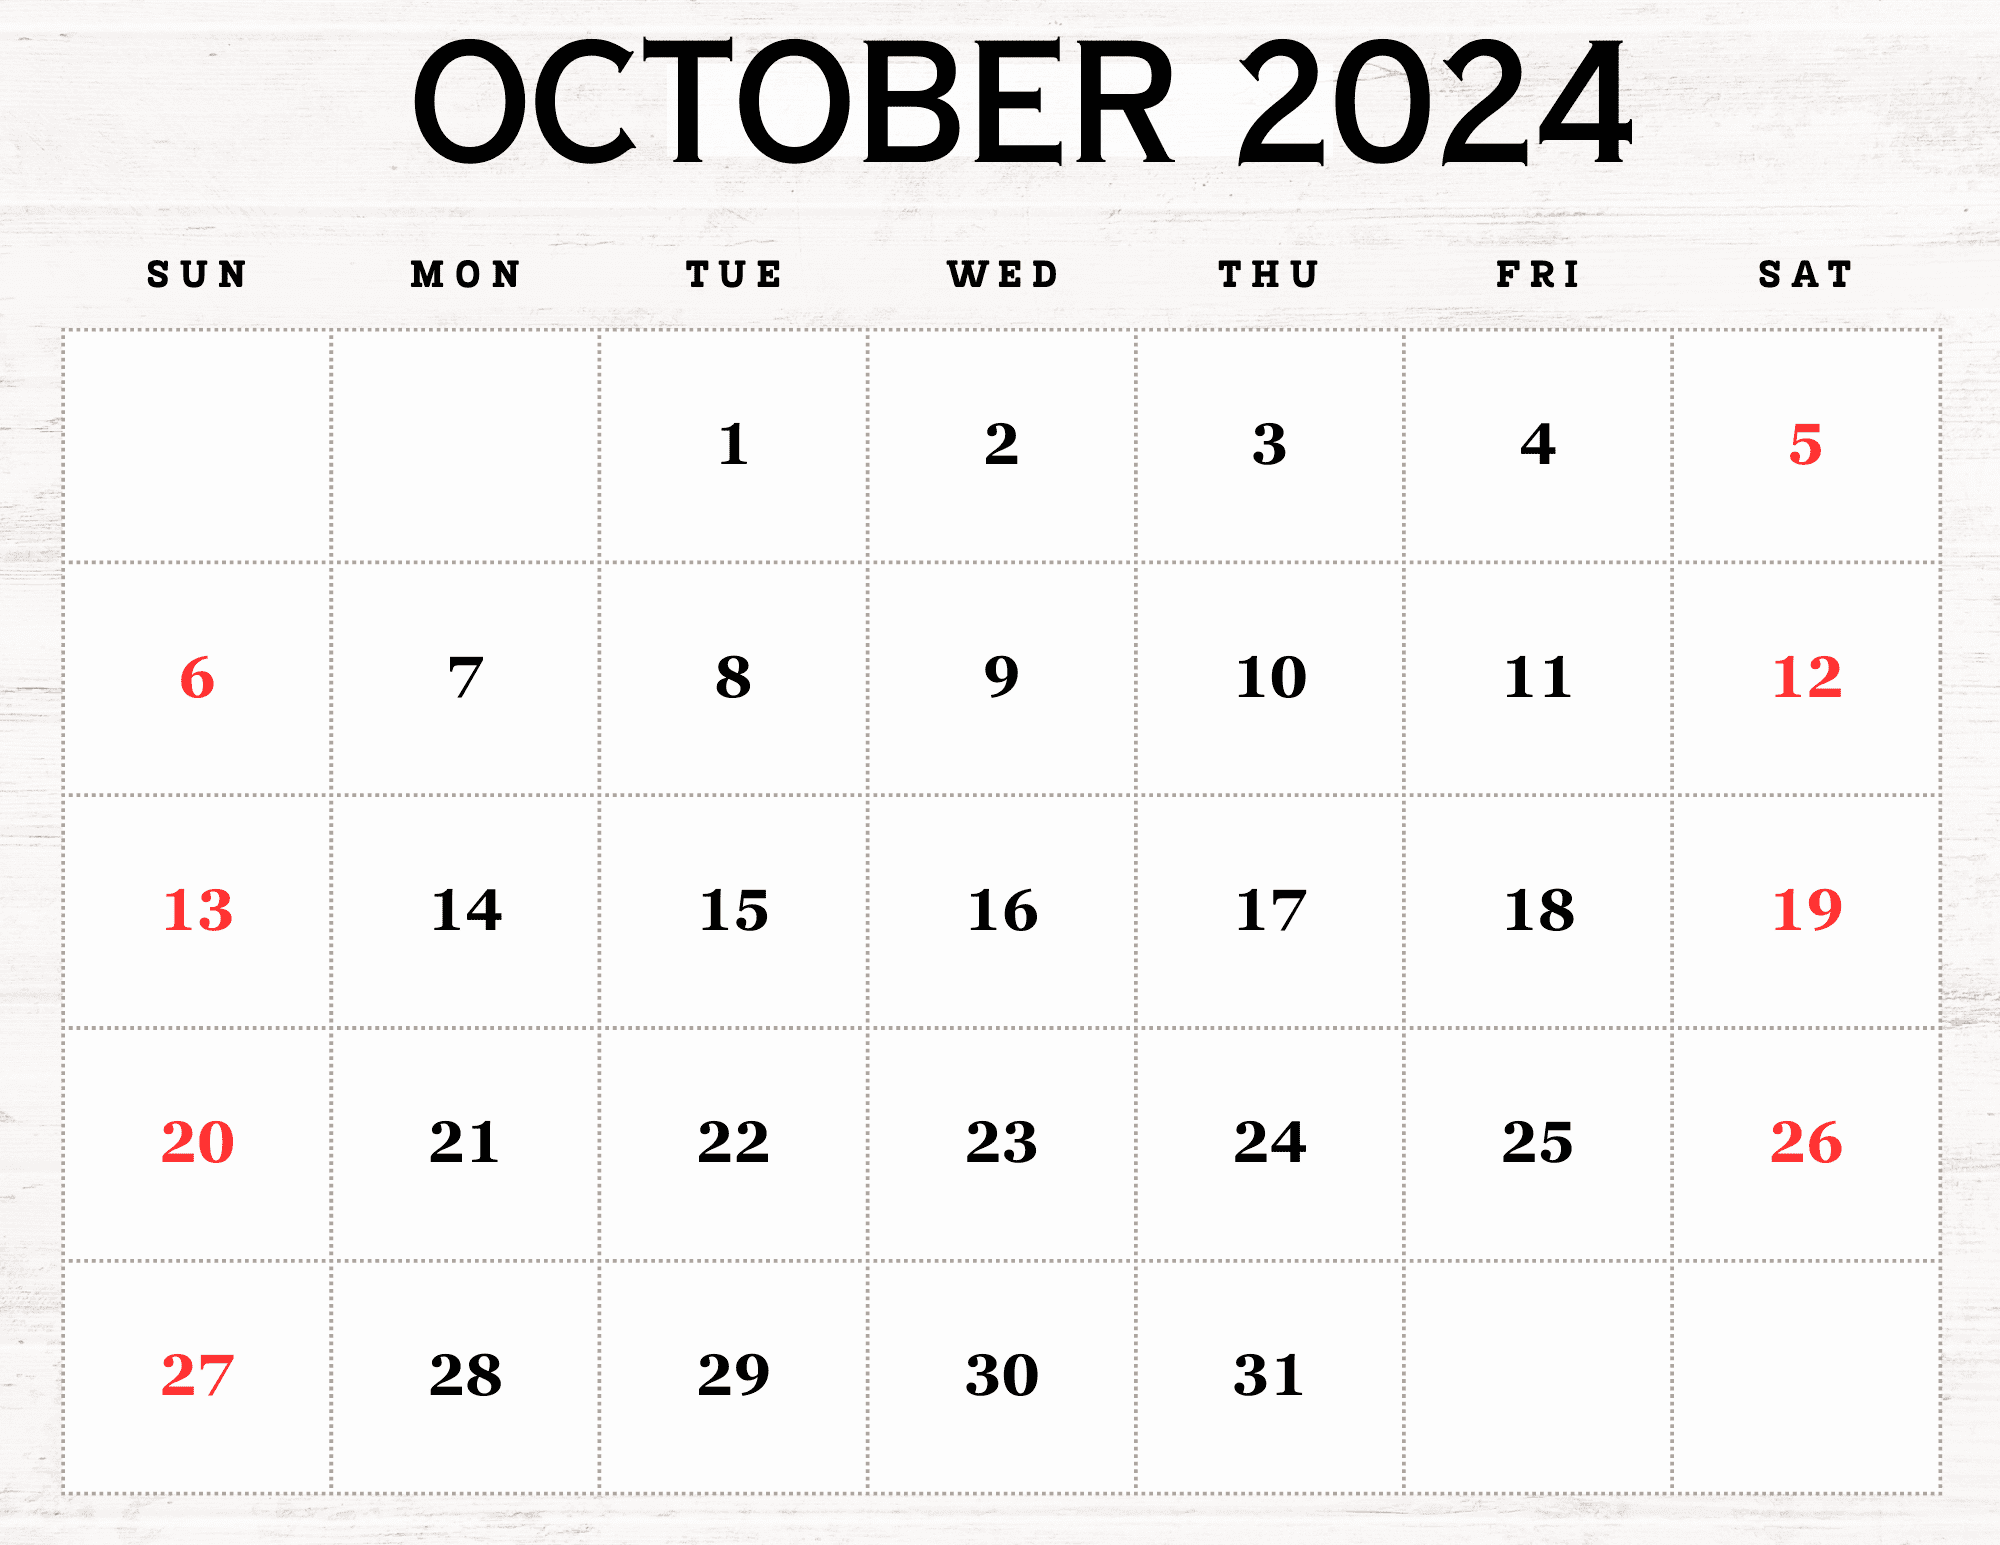 october-2024-calendar-printable-pdf-free-templates-with-holidays